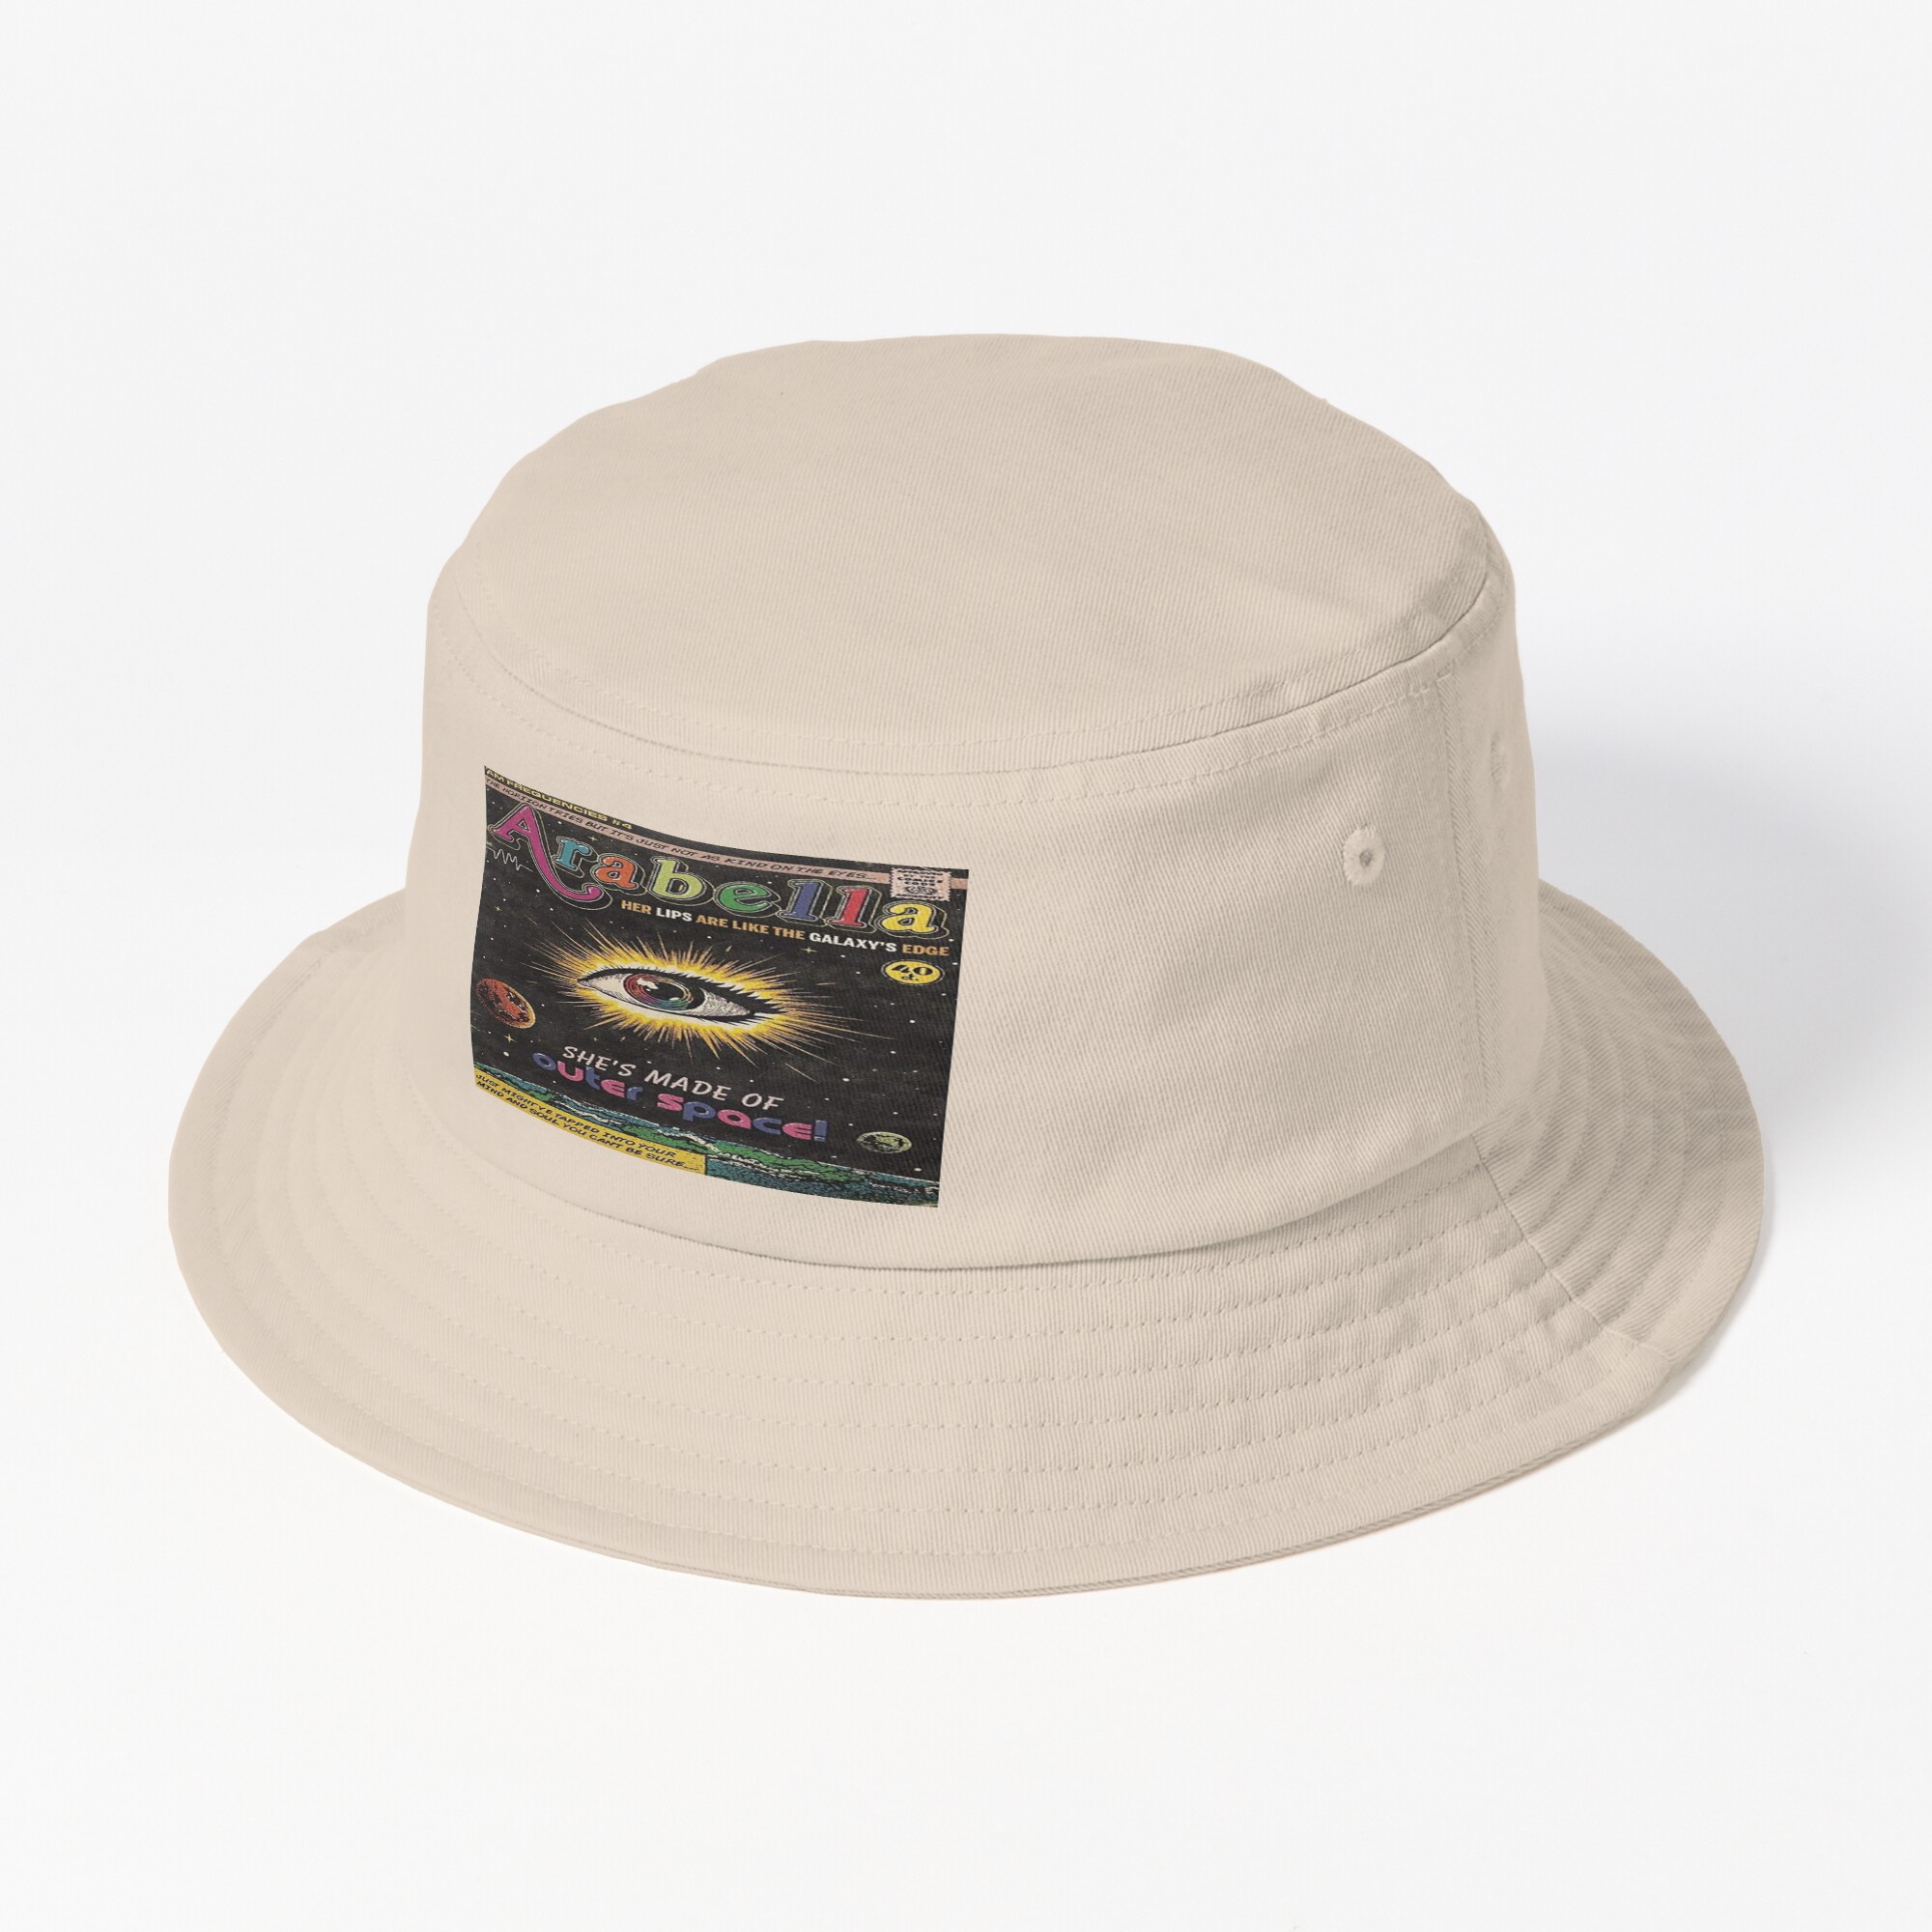 ssrcobucket hatproducte5d6c5f62bbf65eeprimarysquare2000x2000 bgf8f8f8 - Arctic Monkeys Shop